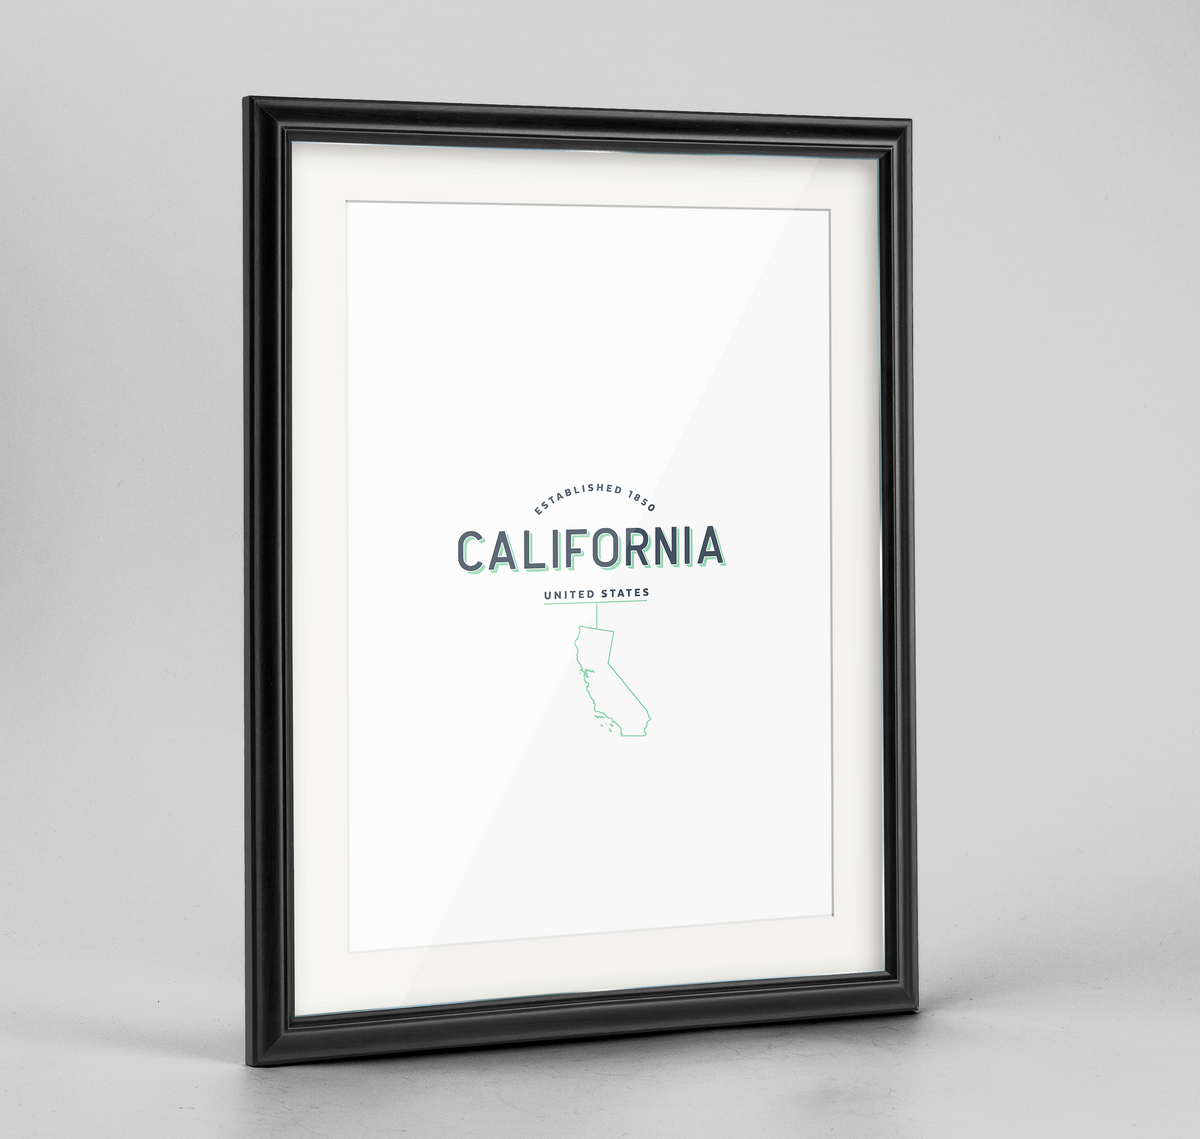 California Word Art Frame Print - State Line